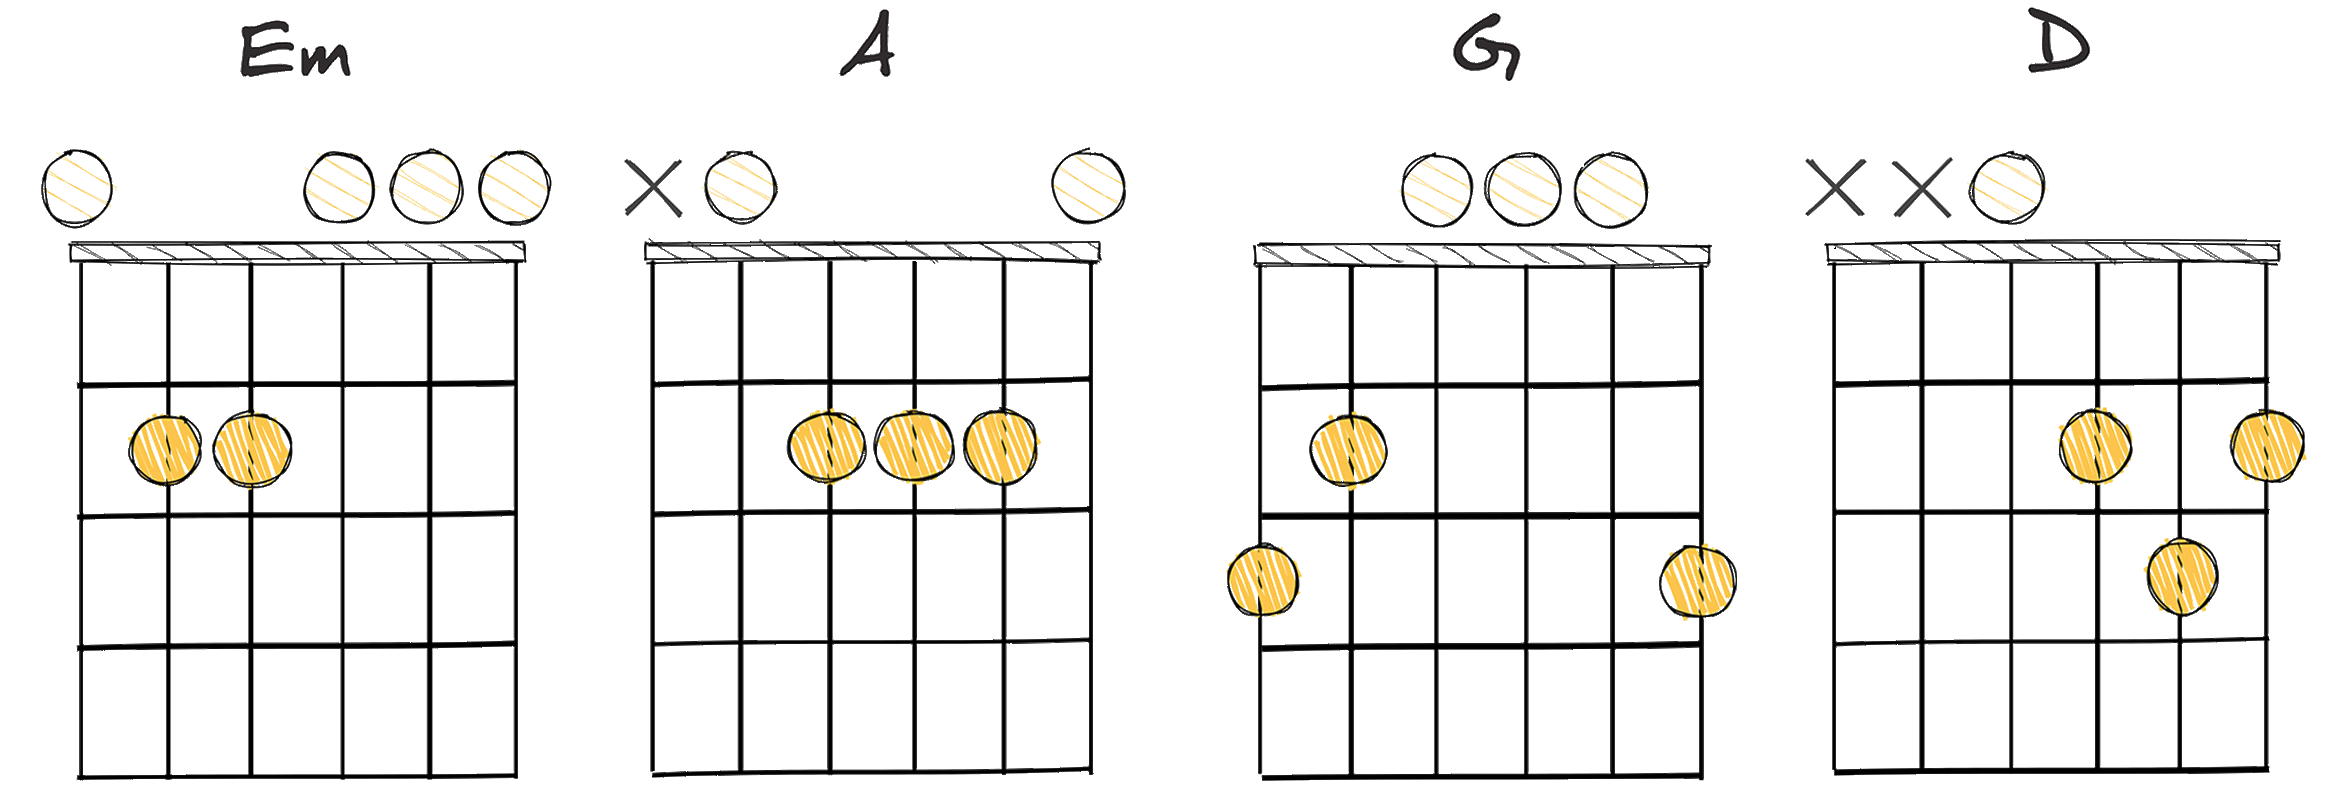 ii-V-IV-I (2-5-4-1) chords diagram